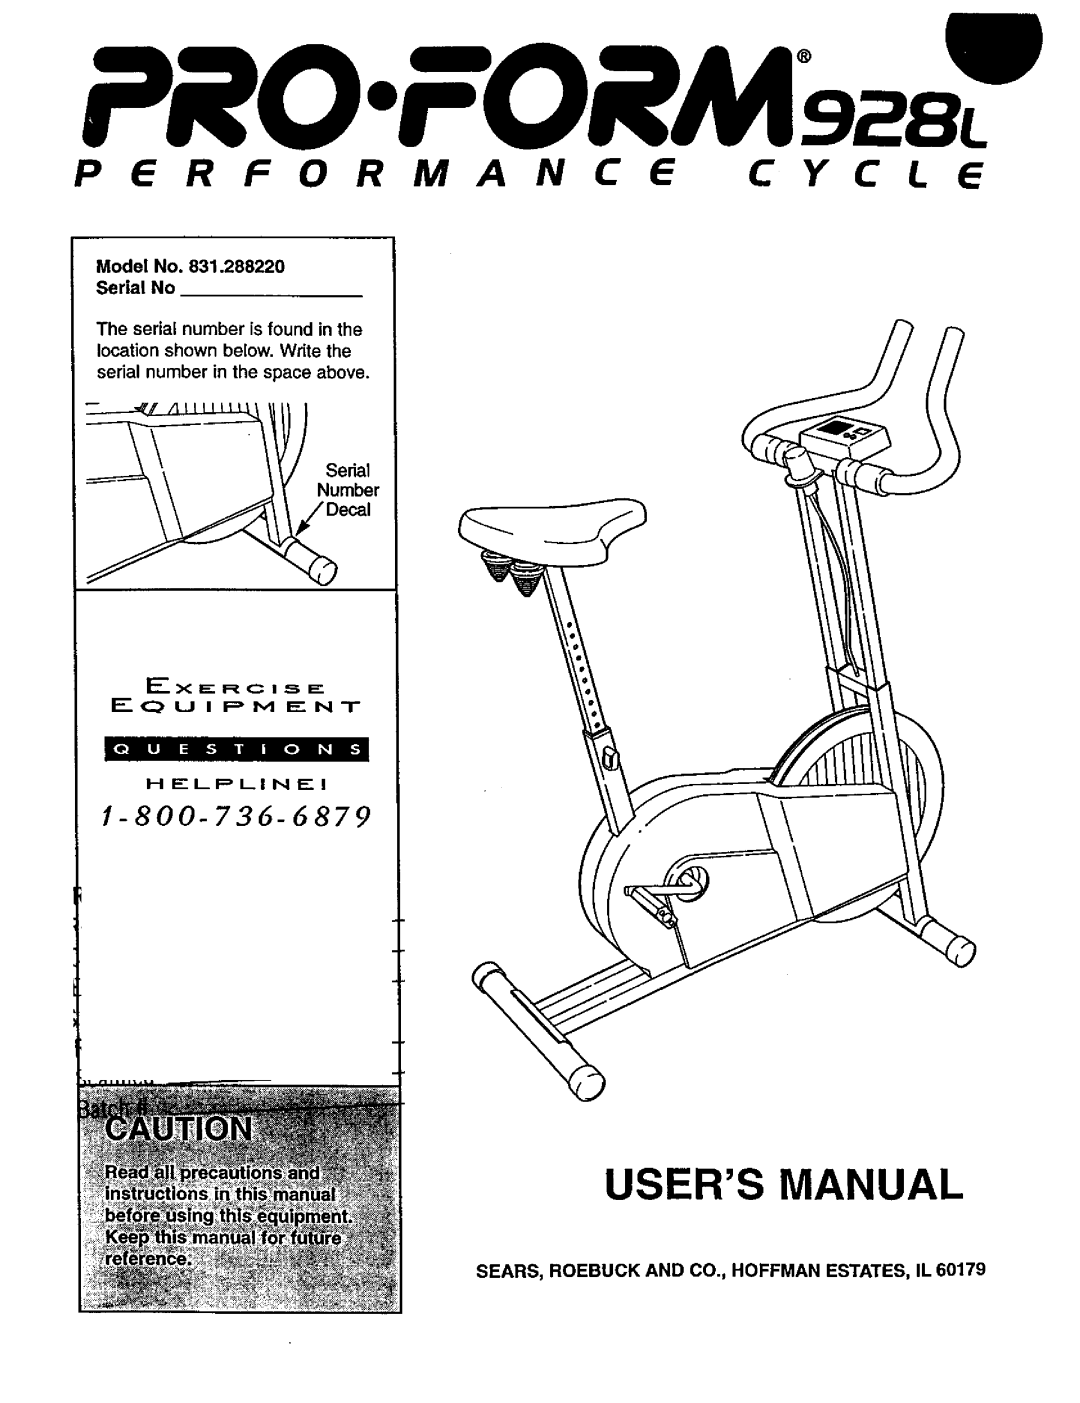 Sears 831.28822 user manual Users Manual, Performancecycle, EXI= RC I .cE, F---Ou I Pm Ent, 0ollll, mlol 